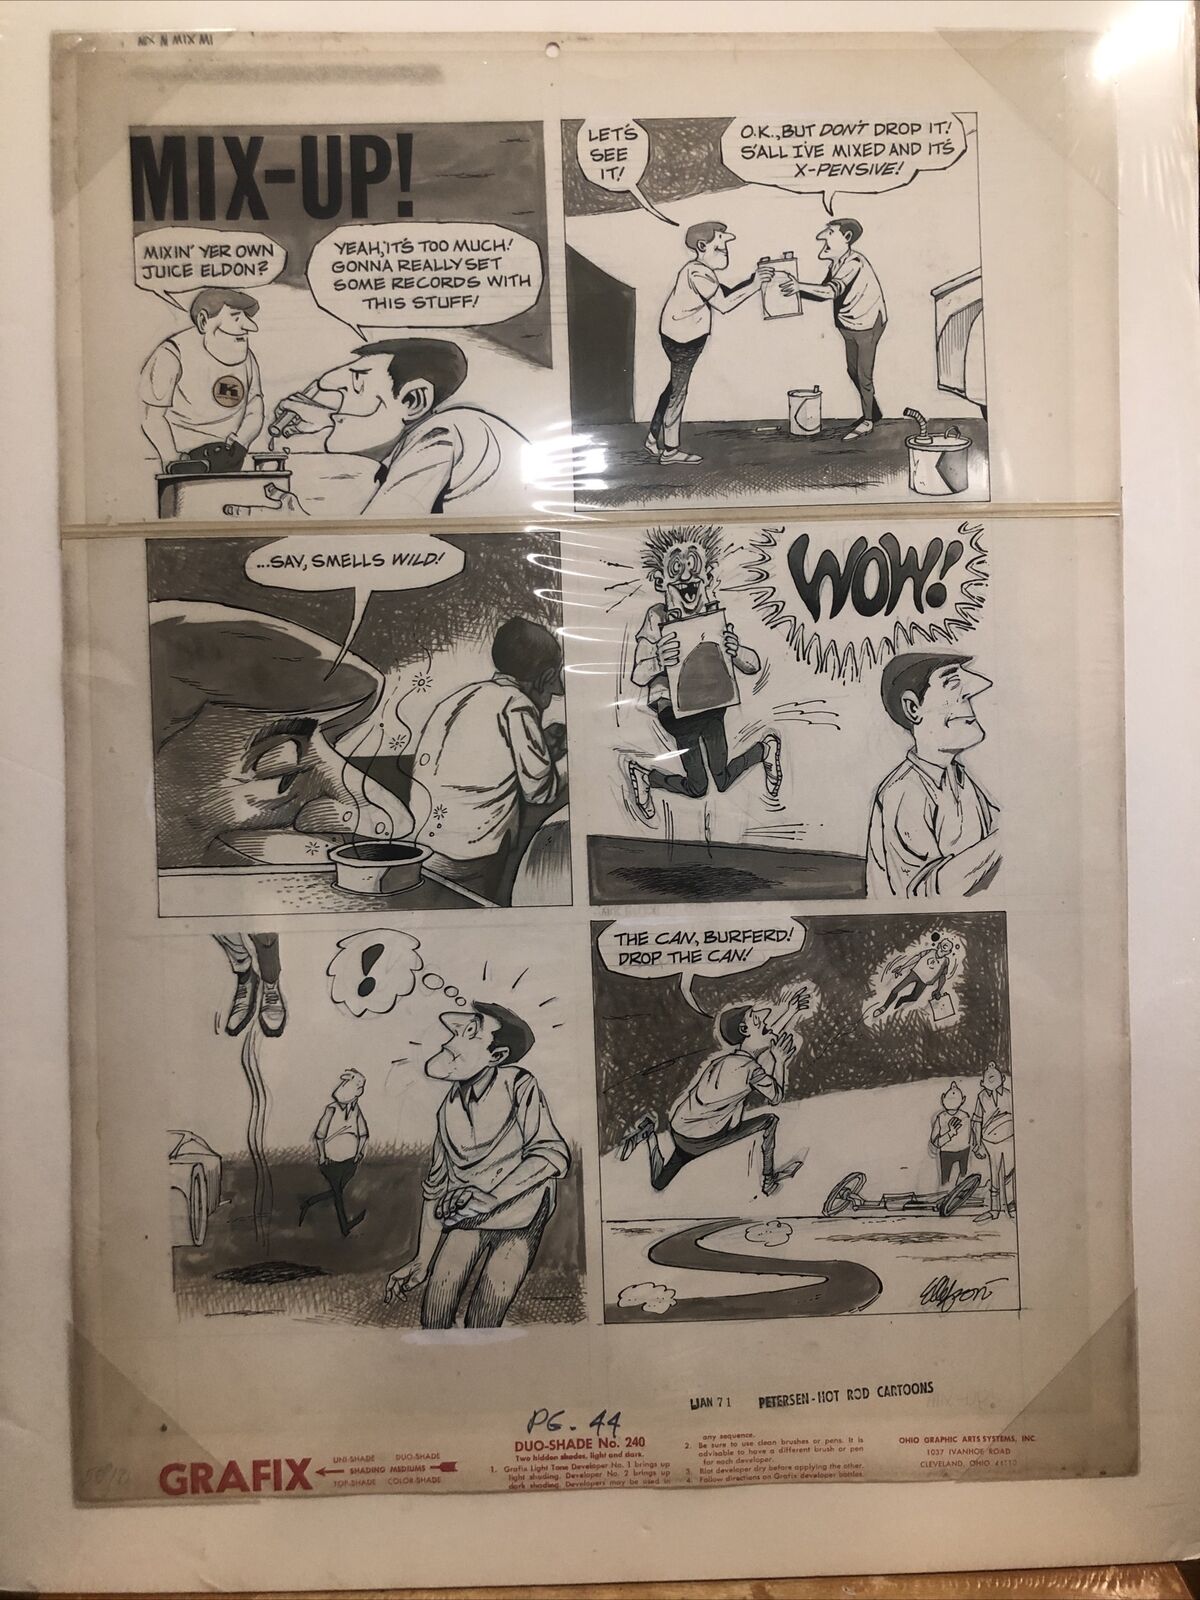 Dennis Ellefson Hot Rod Cartoon Page 44 January 71 full story six panels